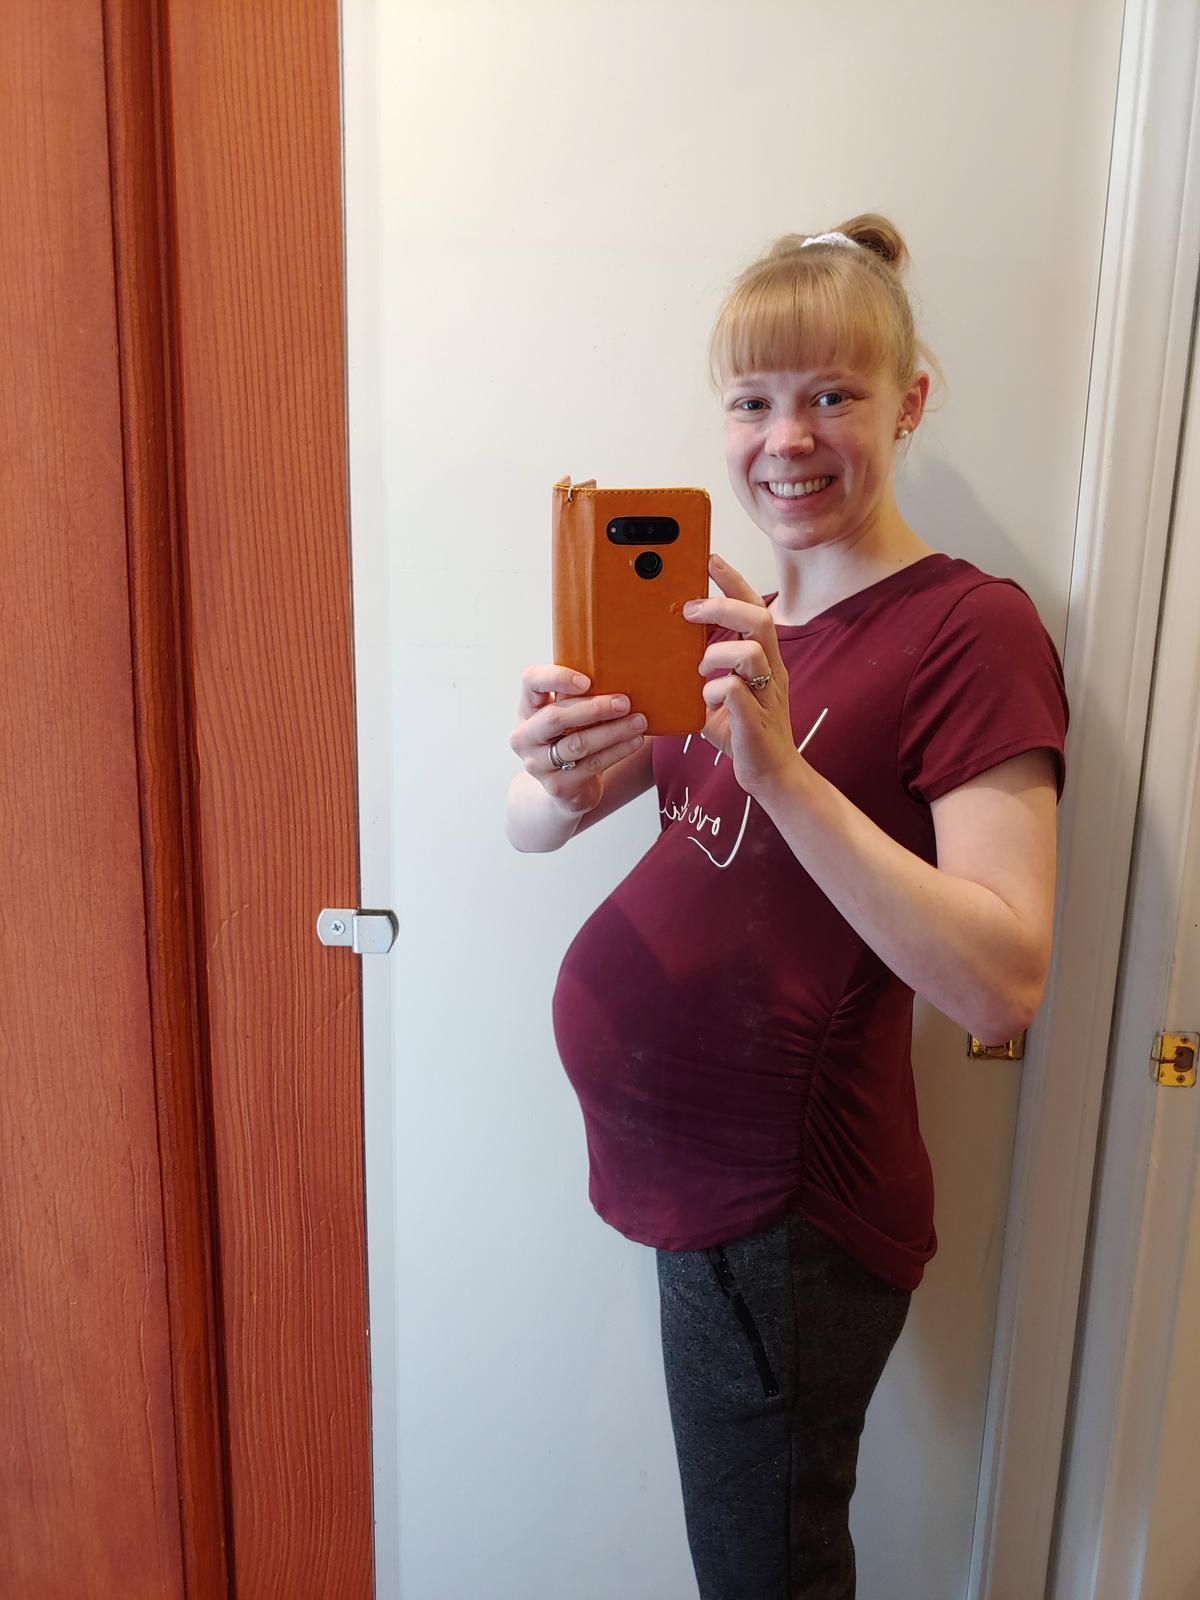 Abigail Ostrom during her pregnancy. (Courtesy of Abigail Ostrom)